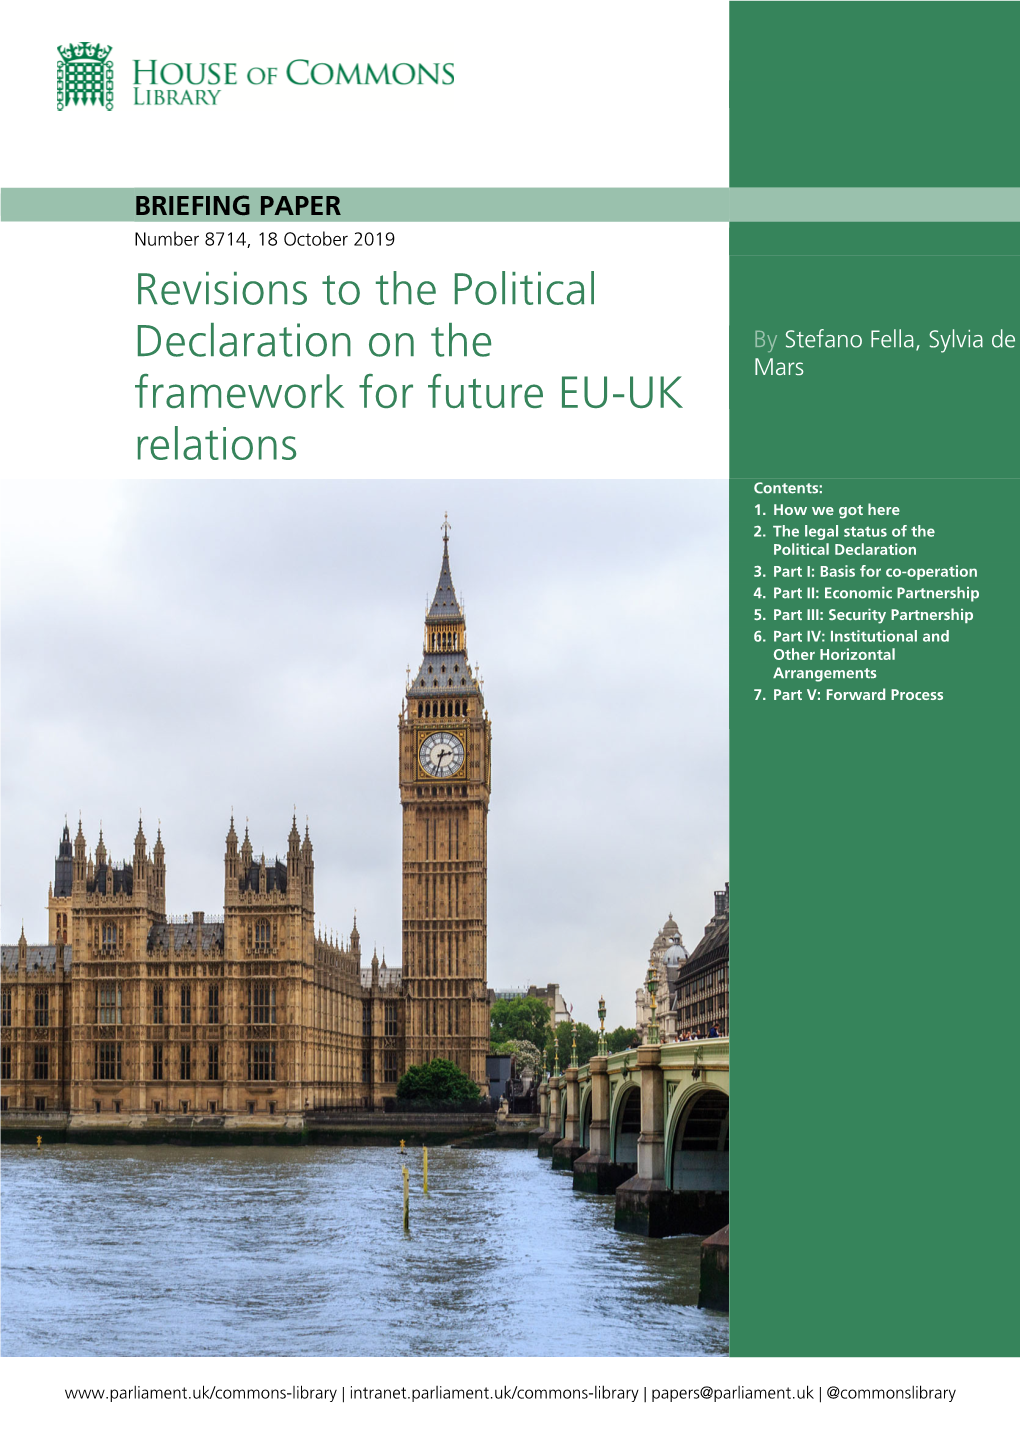 Political Declaration on the by Stefano Fella, Sylvia De Mars Framework for Future EU-UK Relations Contents: 1